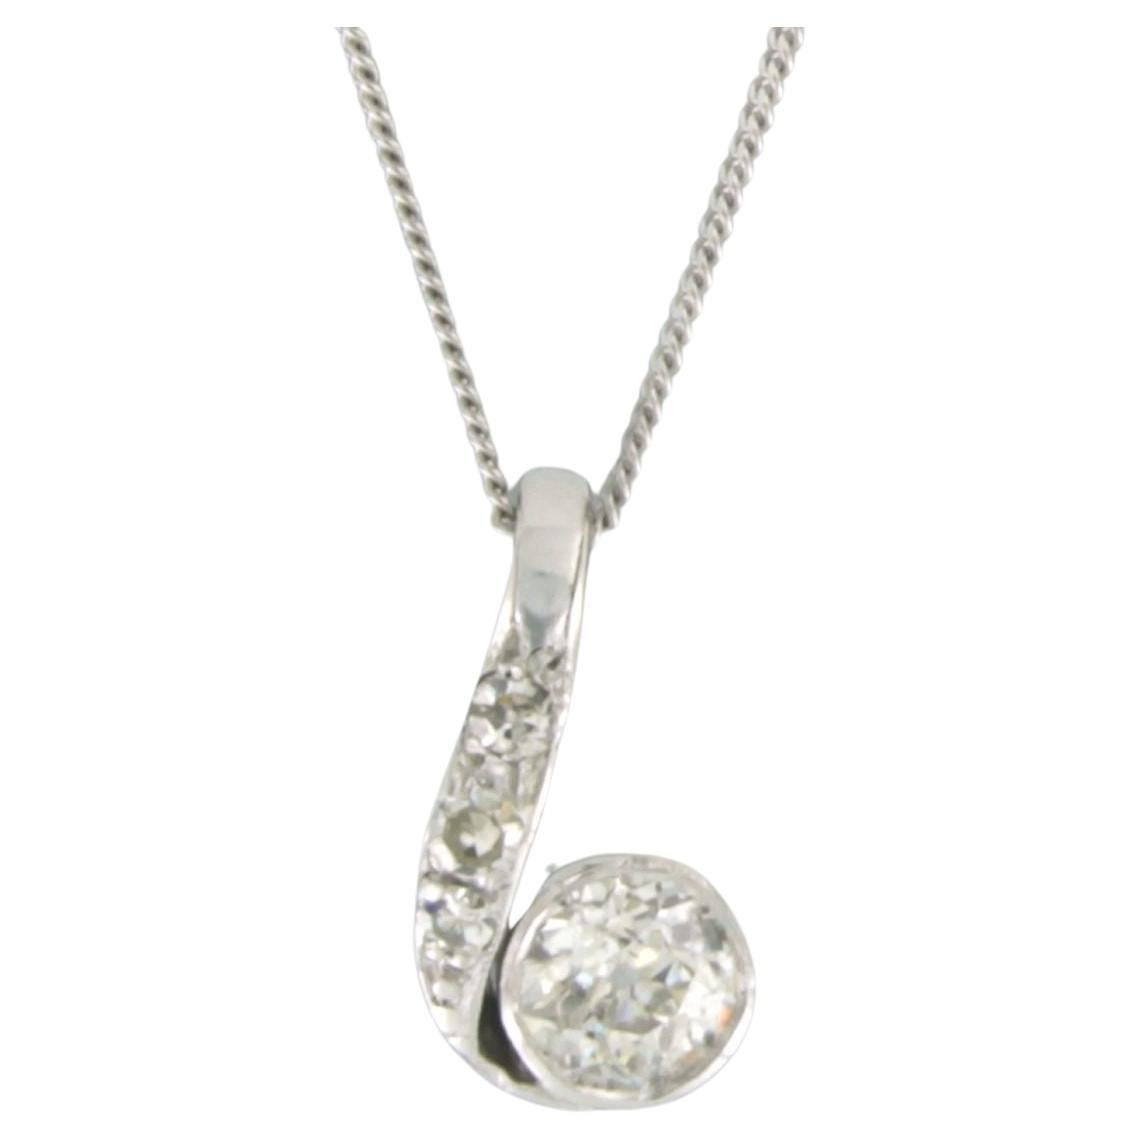 Necklace with Art Nouvea pendant set with diamonds 14k white gold For Sale